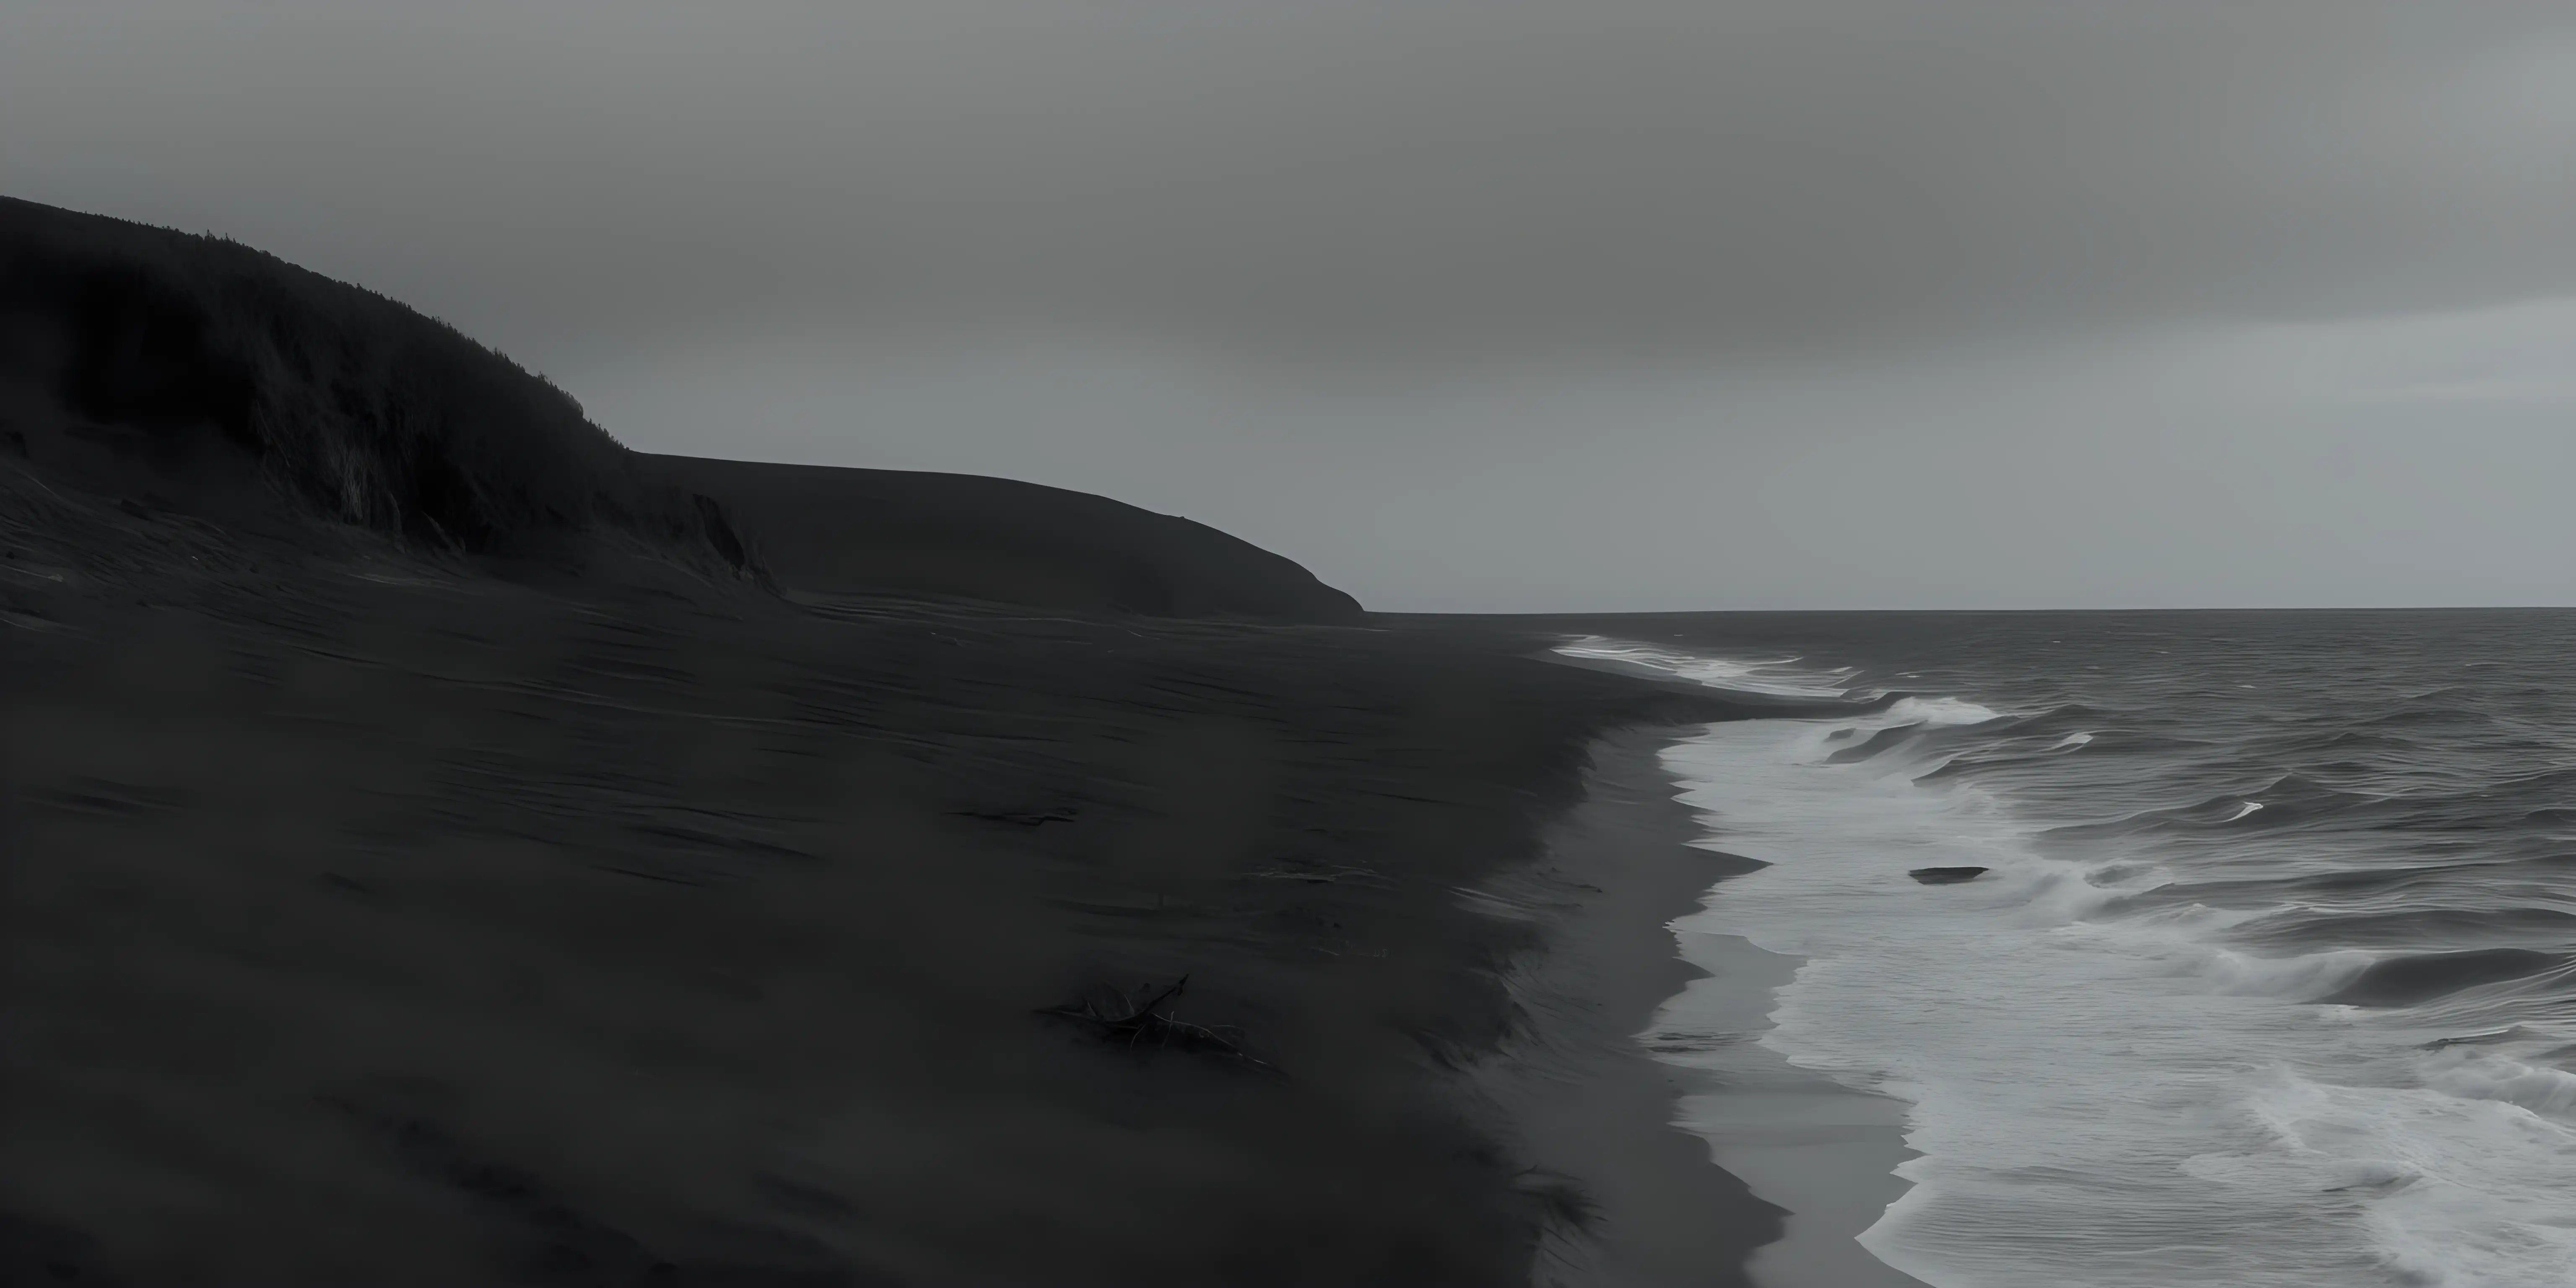 Dystopian Realism Nordic Seascape Fantasy in Detailed Monochrome